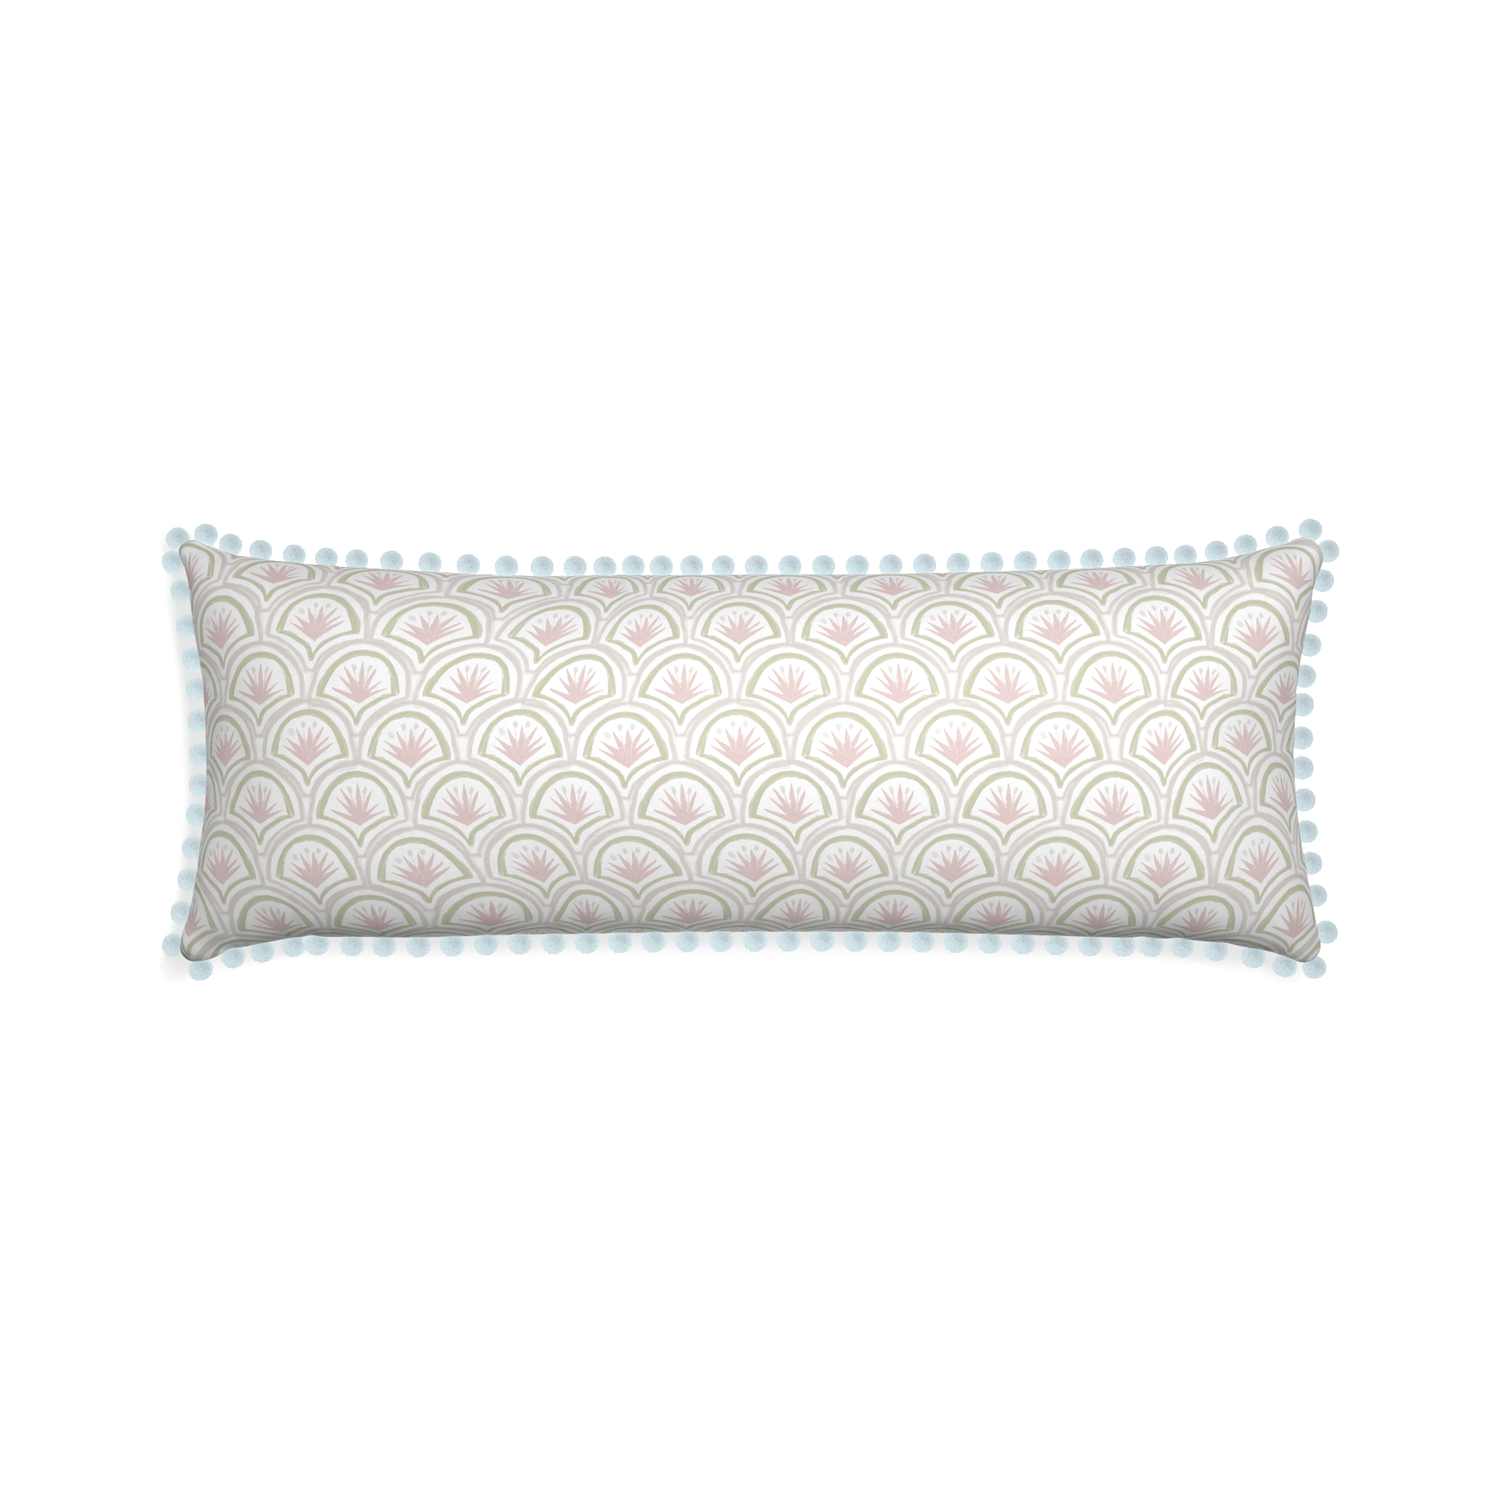 Xl-lumbar thatcher rose custom pillow with powder pom pom on white background